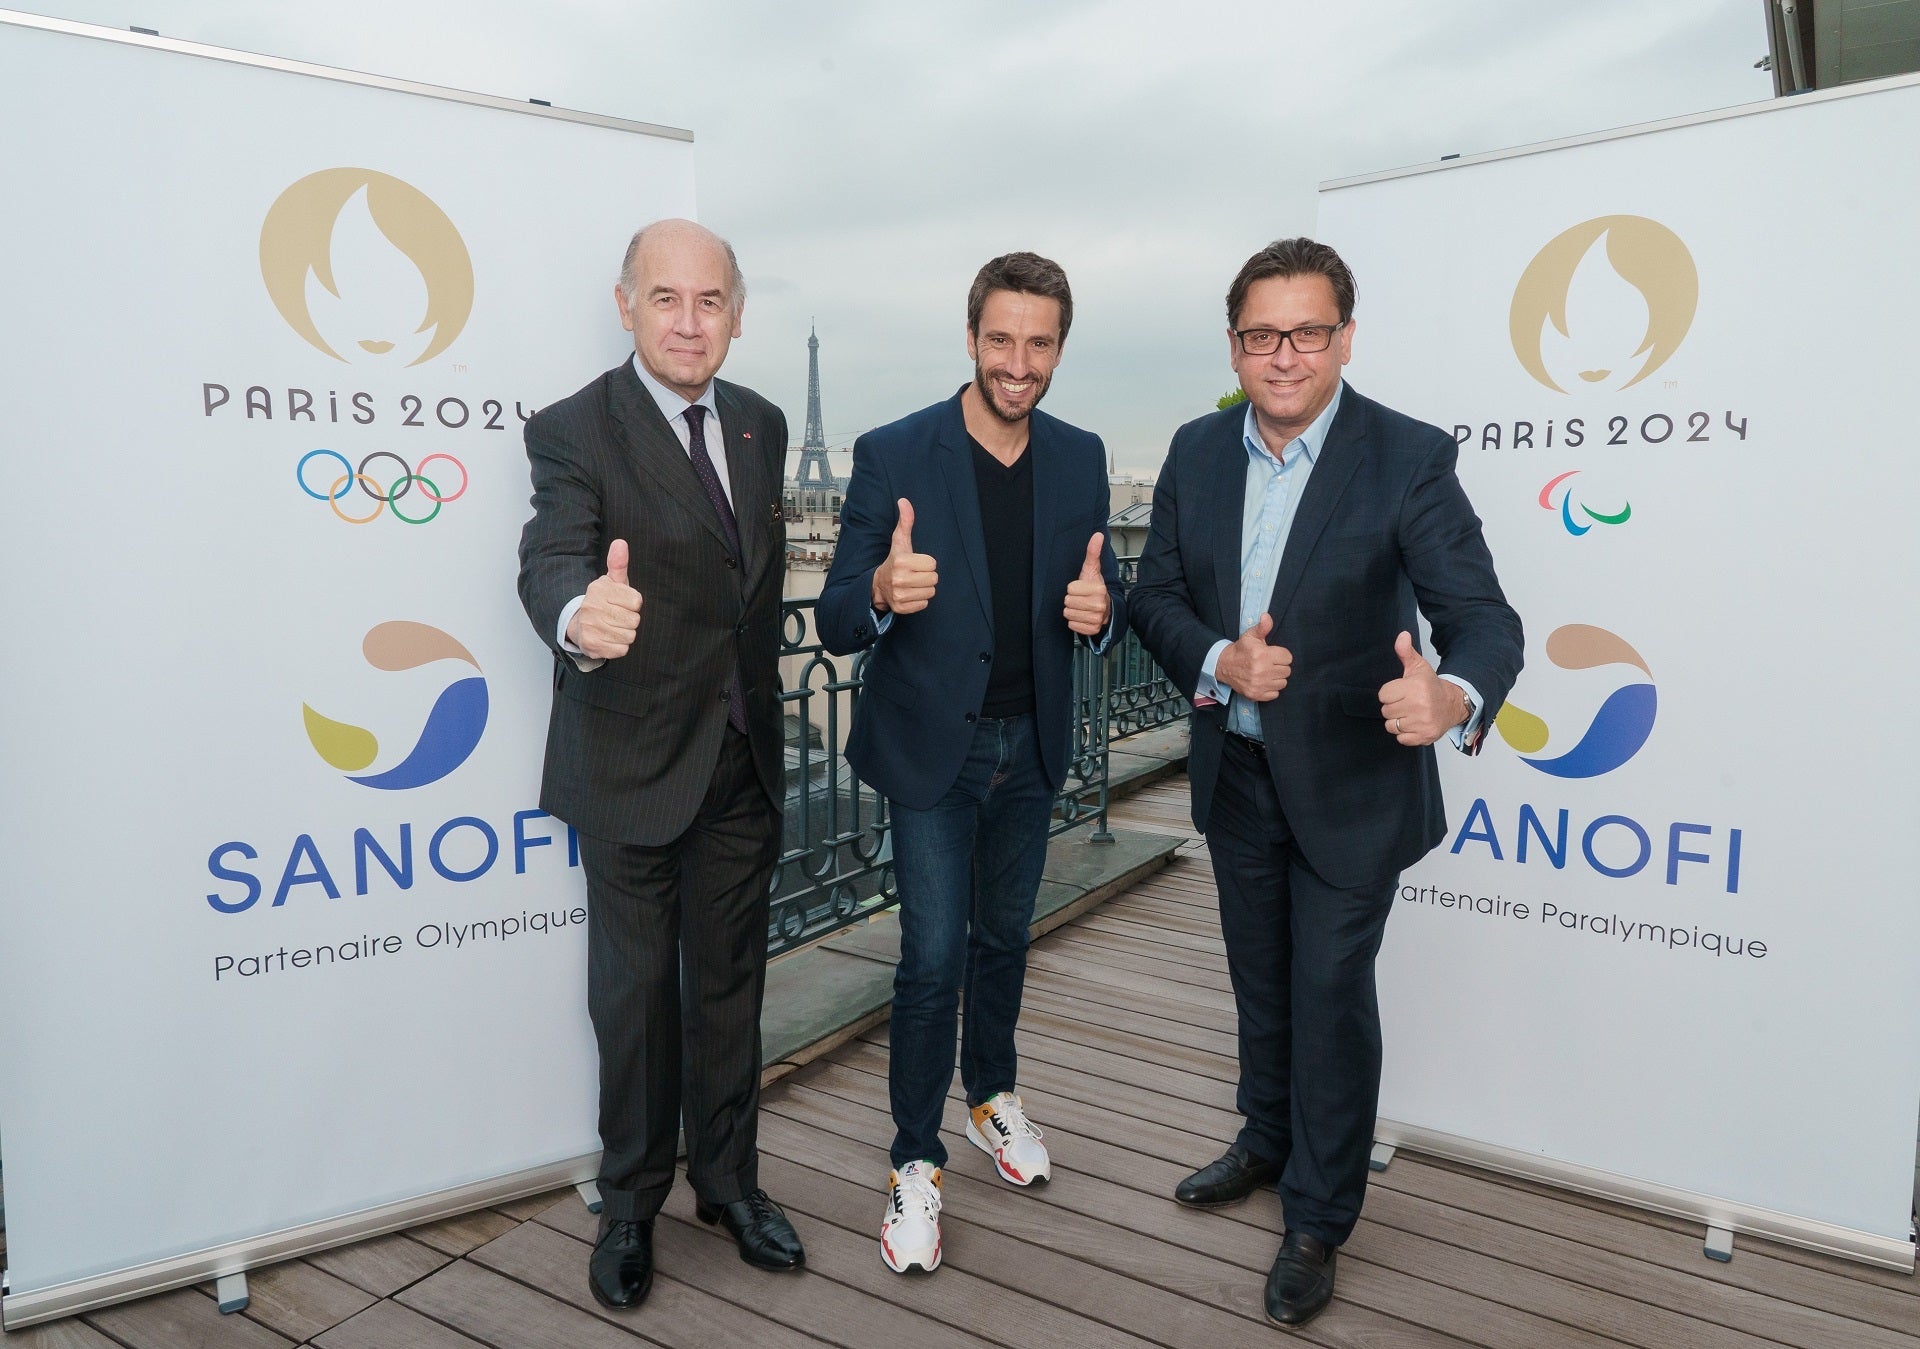 Sanofi on board for Paris 2024 Olympics and Paralympics